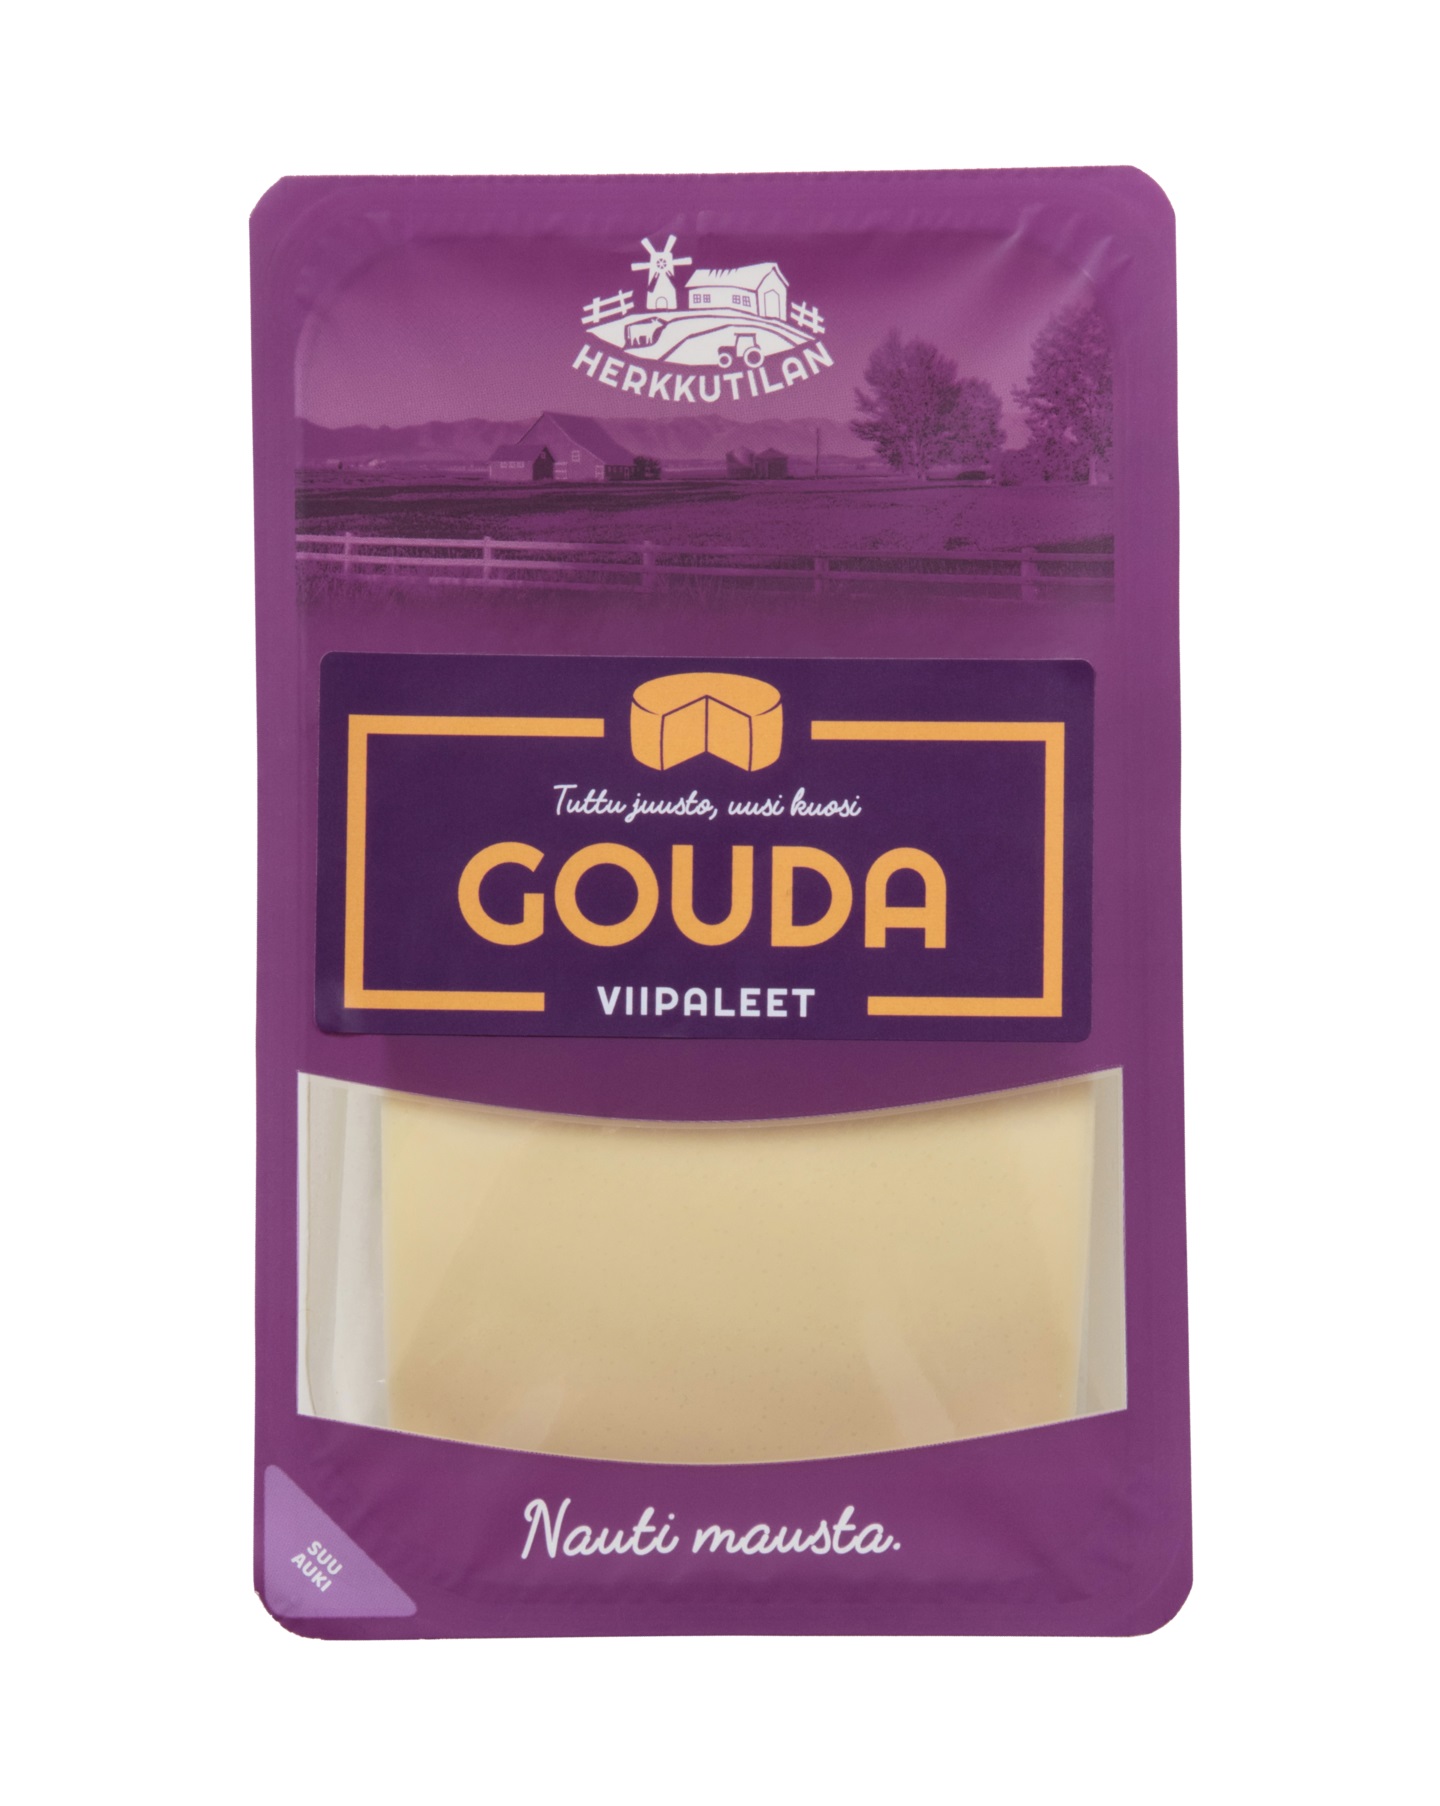 Herkkutilan slices Gouda Cheese 400g